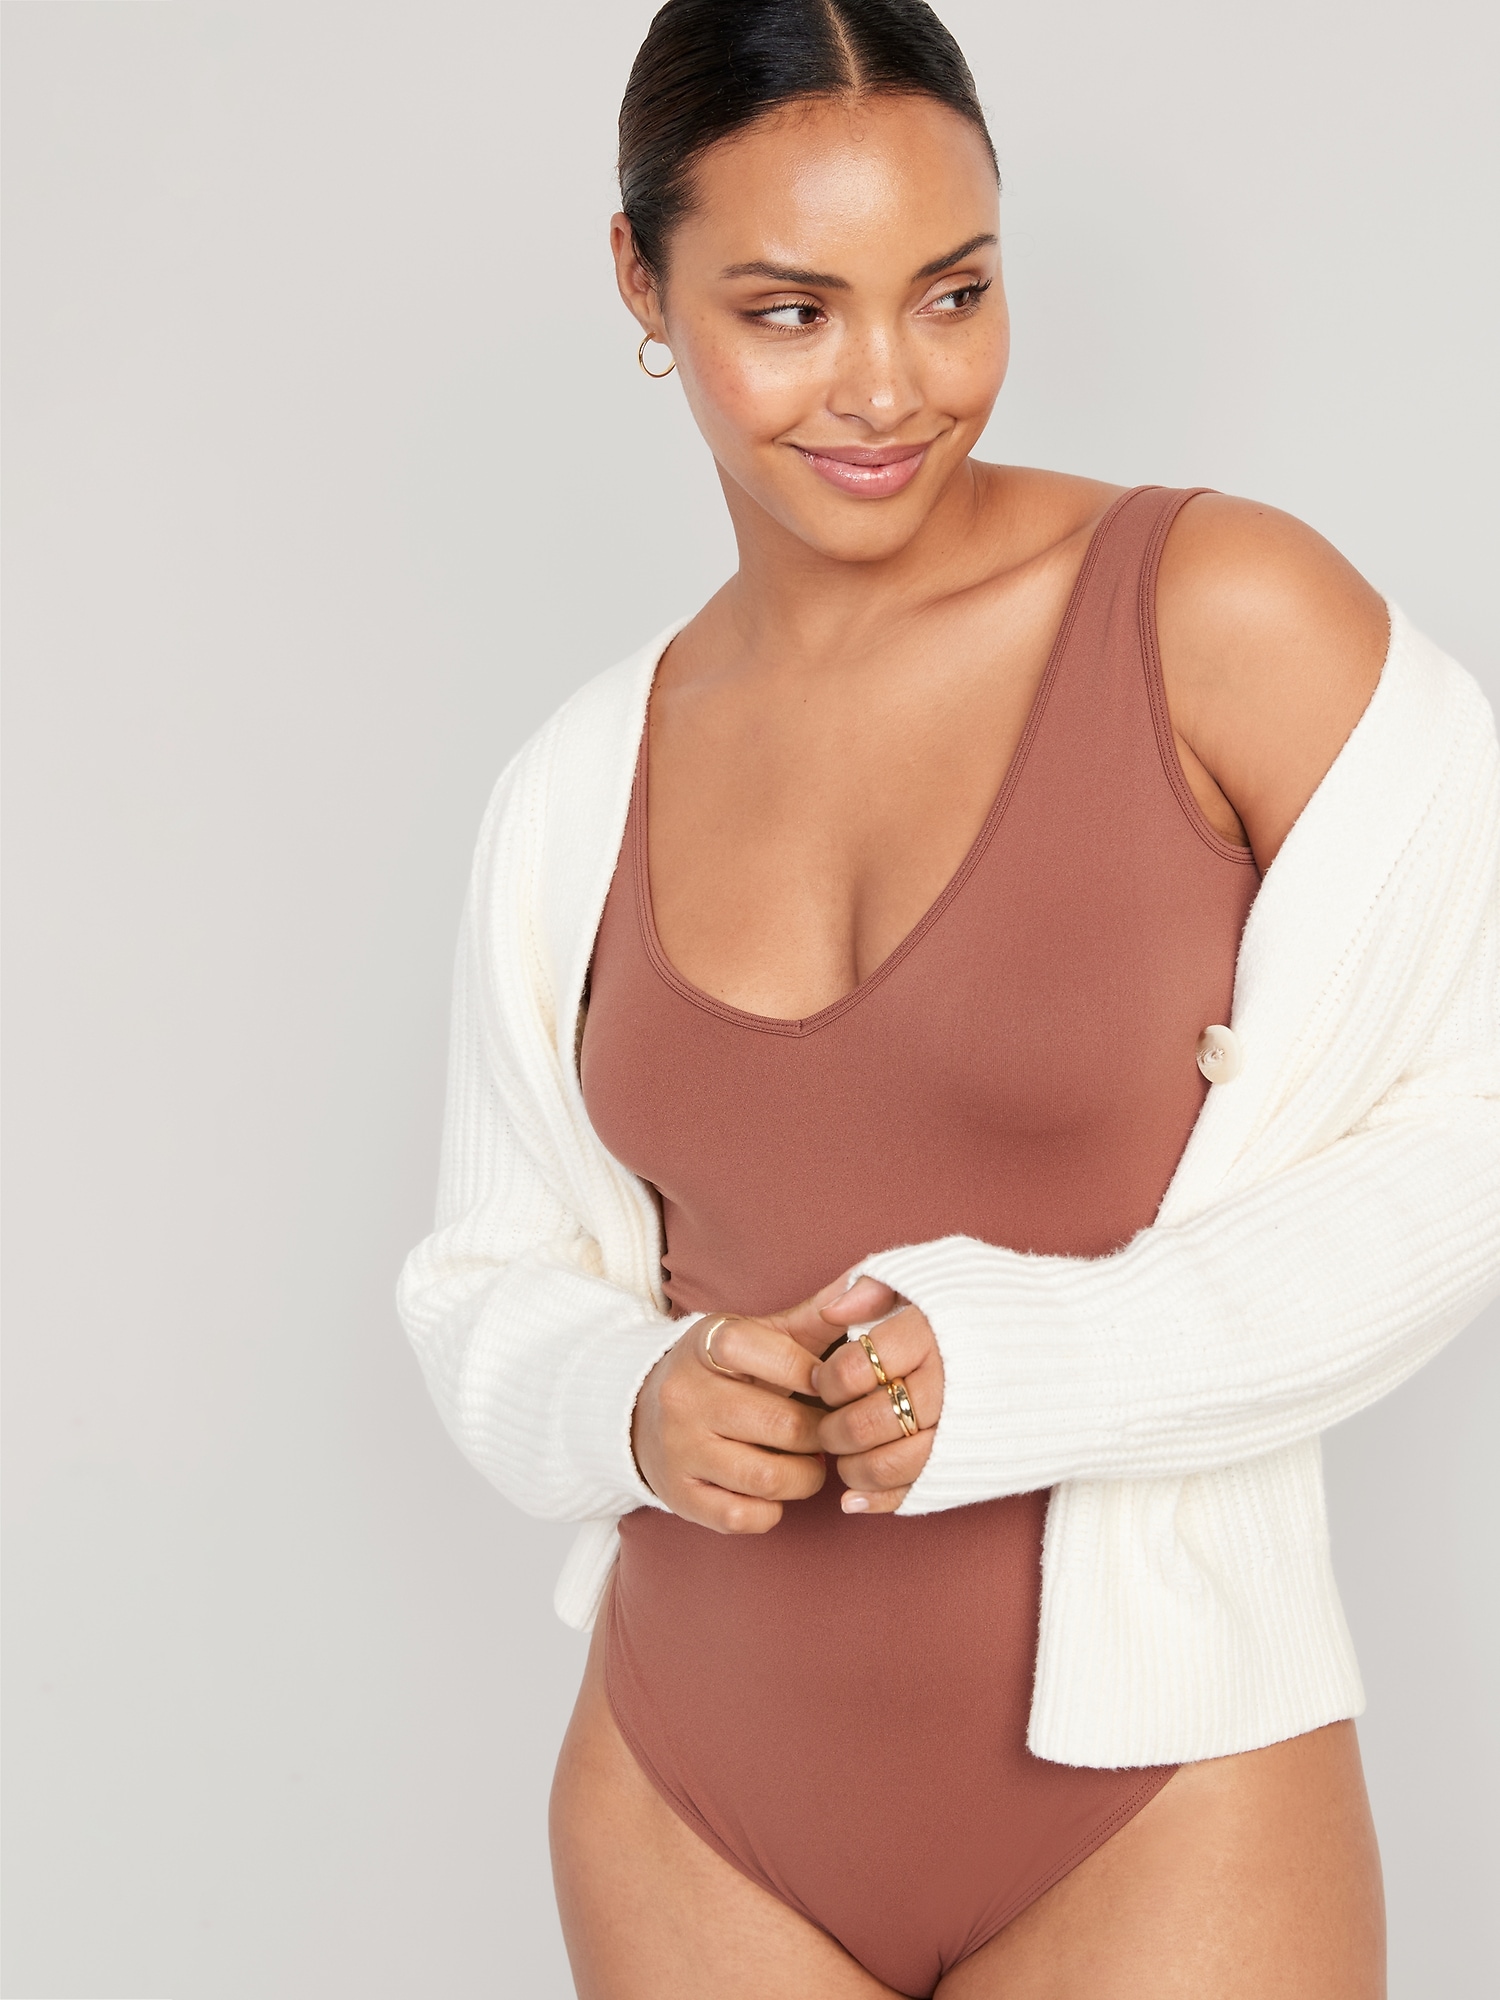 Women's New Mix brand solid seamless tank top bodysuit. - O (7306200)